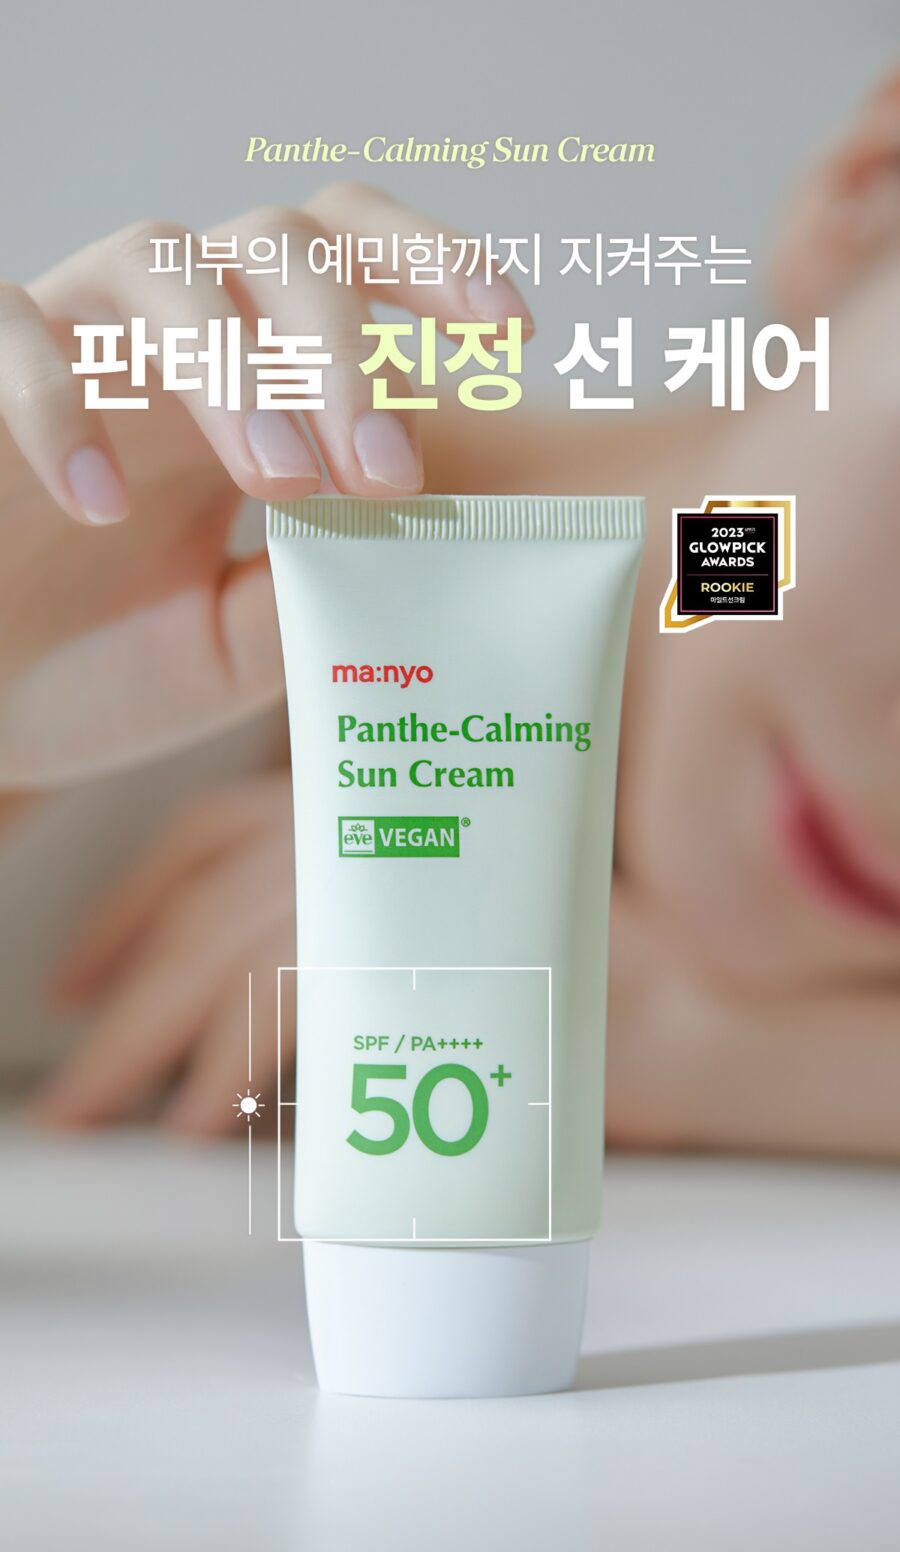 Manyo Factory Panthe Calming Sun Cream korean skincare product online shop malaysia macau poland1